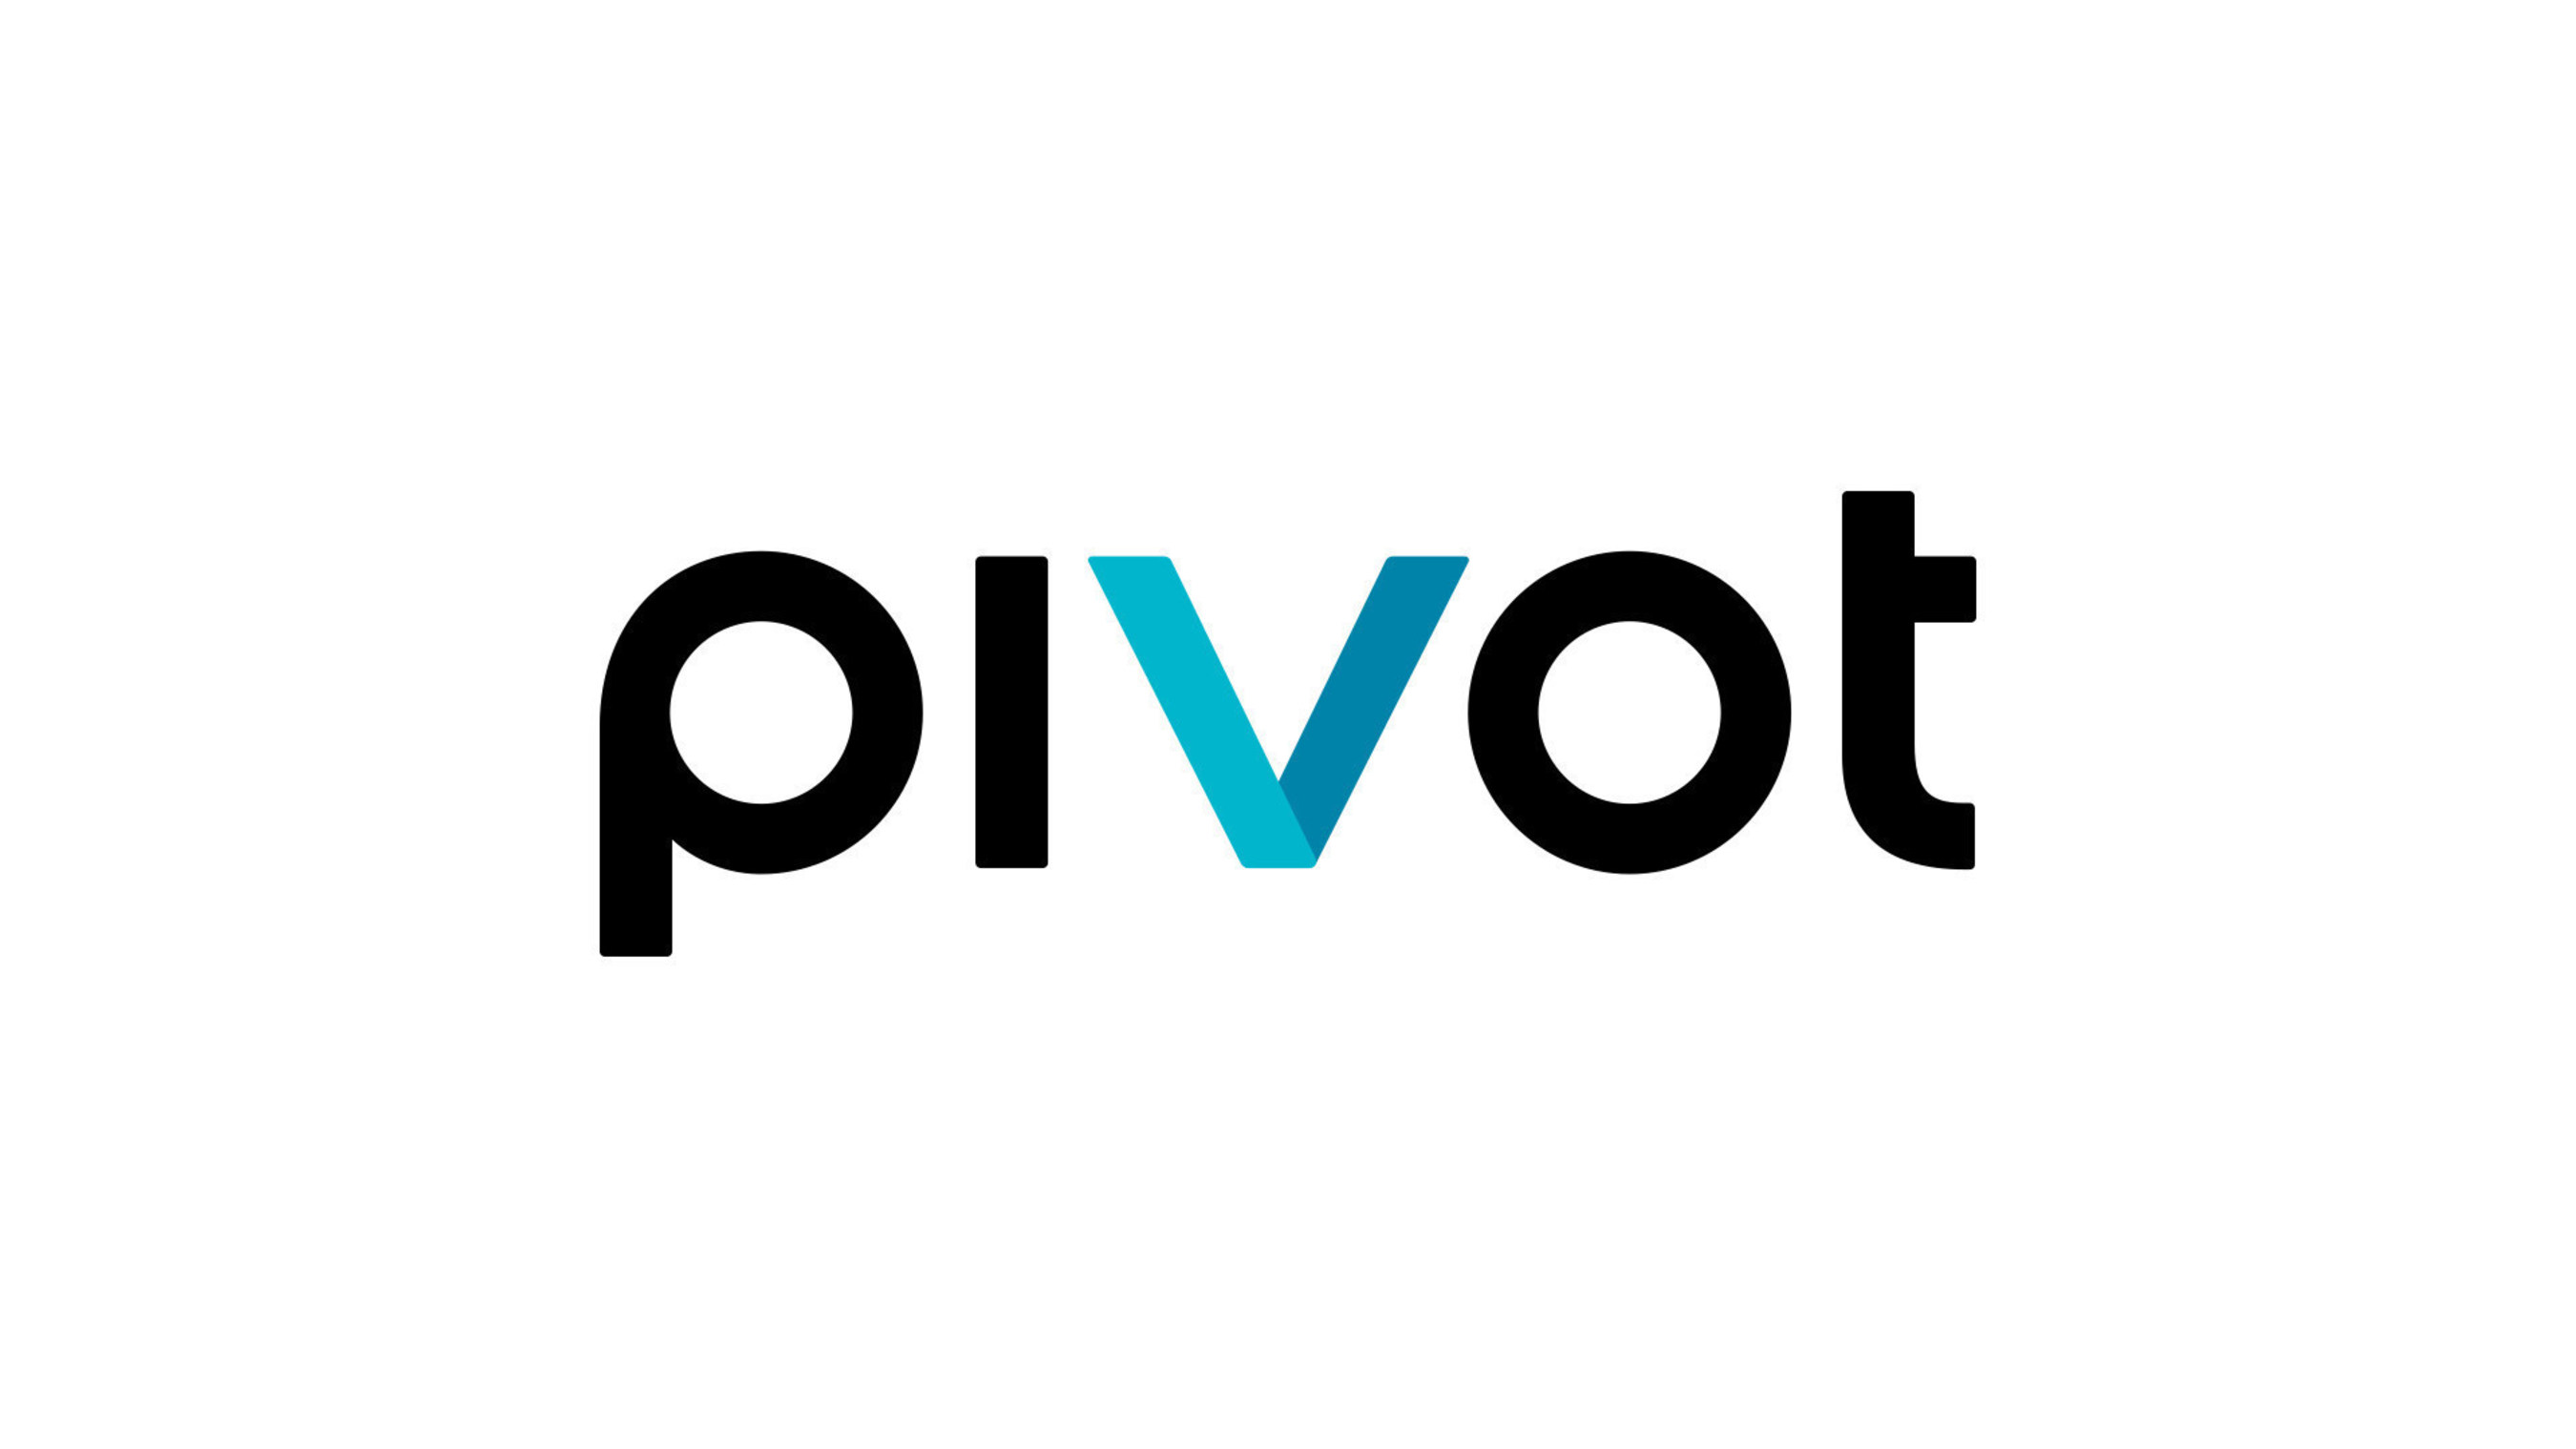 Official Pivot TV logo.